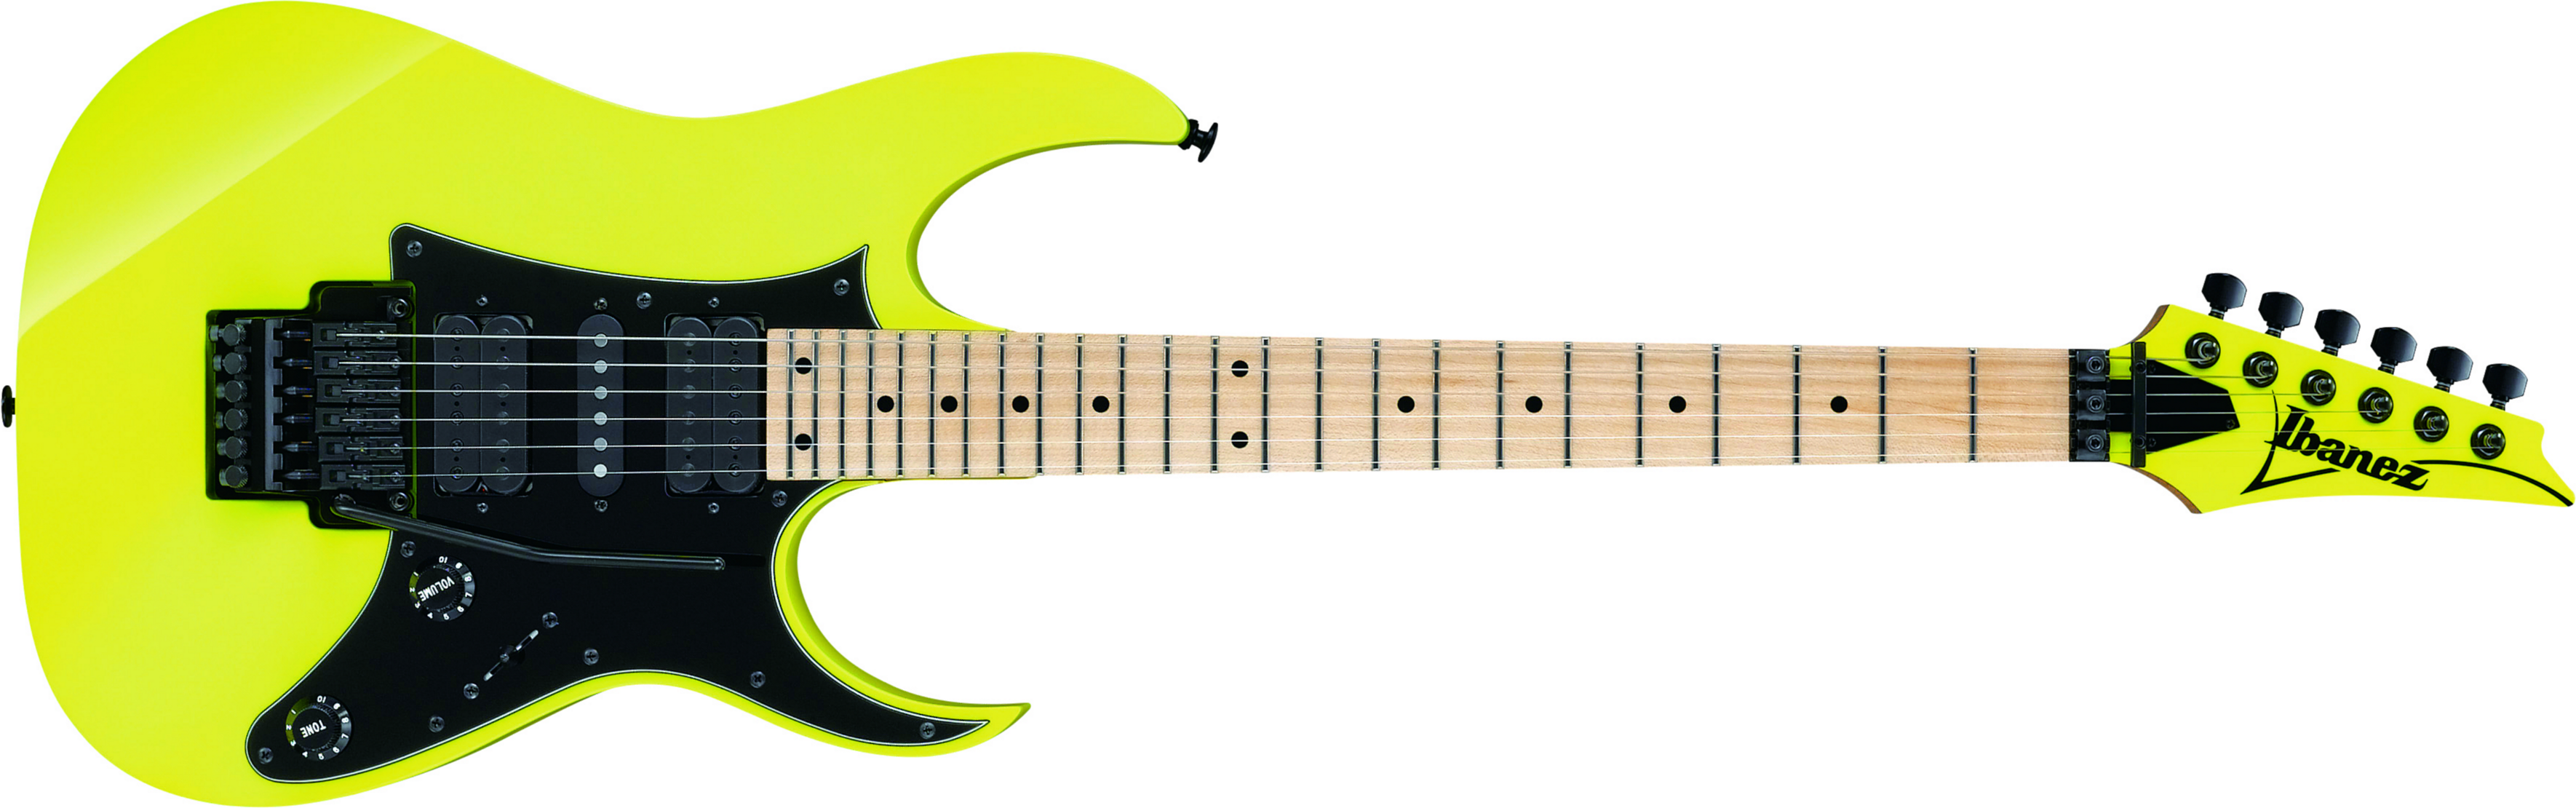 Ibanez Rg550 Dy Genesis Japon Hsh Fr Mn - Desert Sun Yellow - E-Gitarre in Str-Form - Main picture